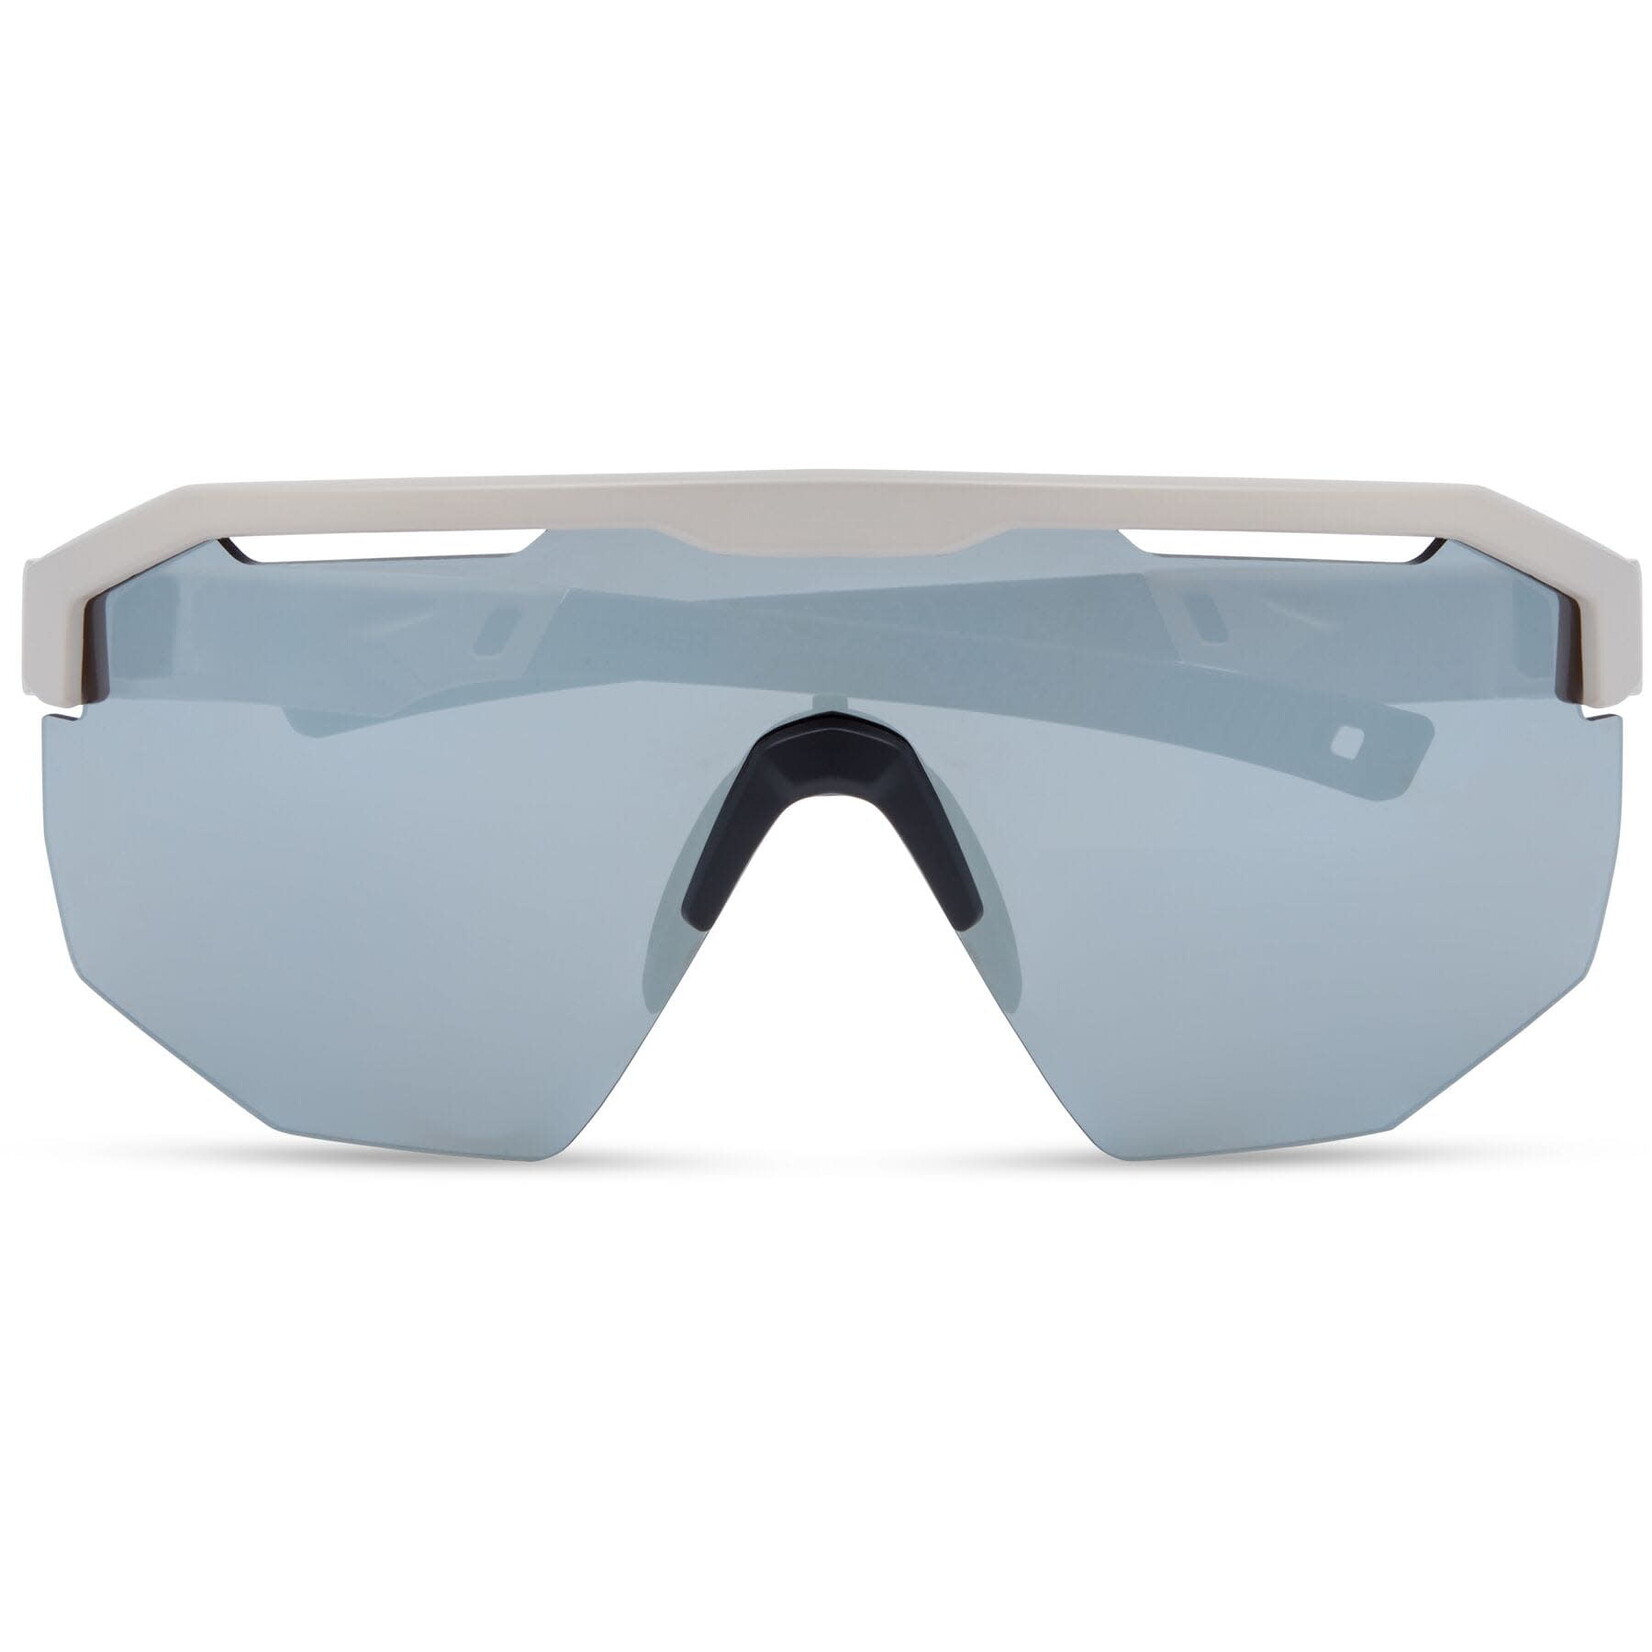 Madison Madison Cipher Sunglasses - 3 pack - desert sand / silver mirror - sustainable